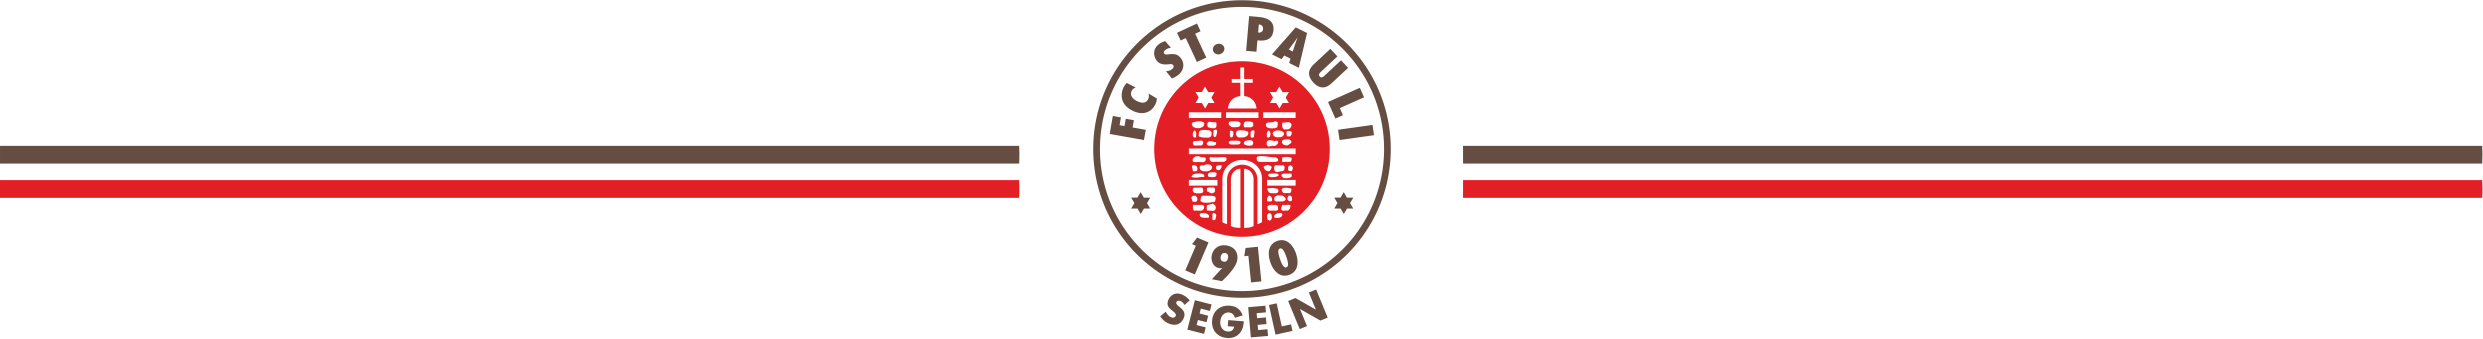 Textilhamburg - FC St.Pauli Segeln